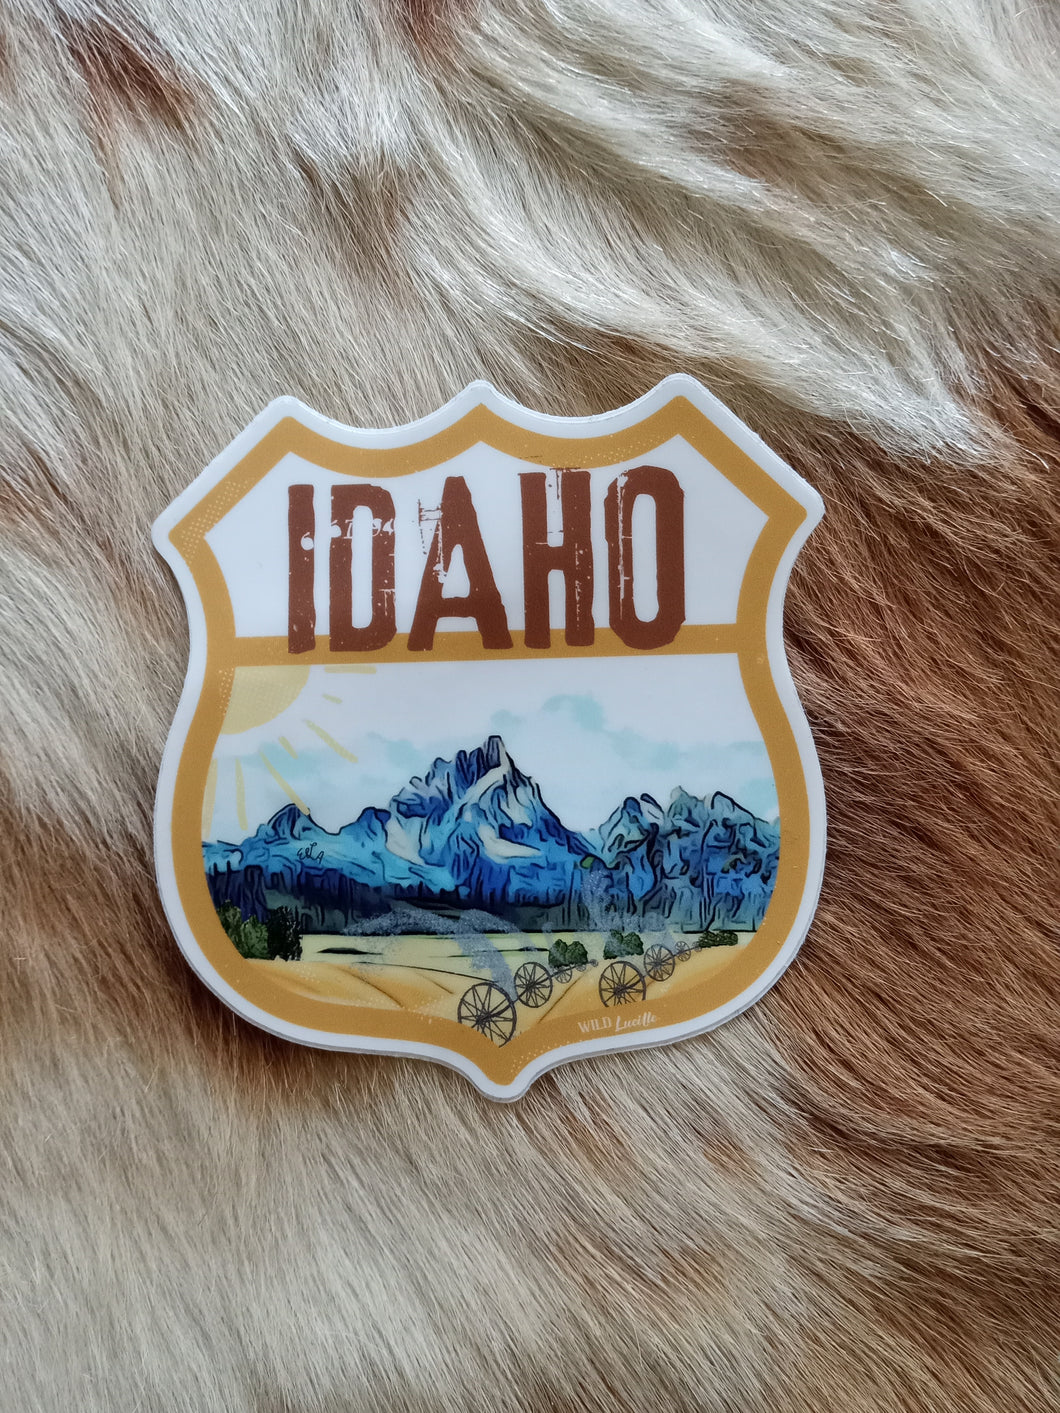 Idaho Highway Sign Decal Sticker